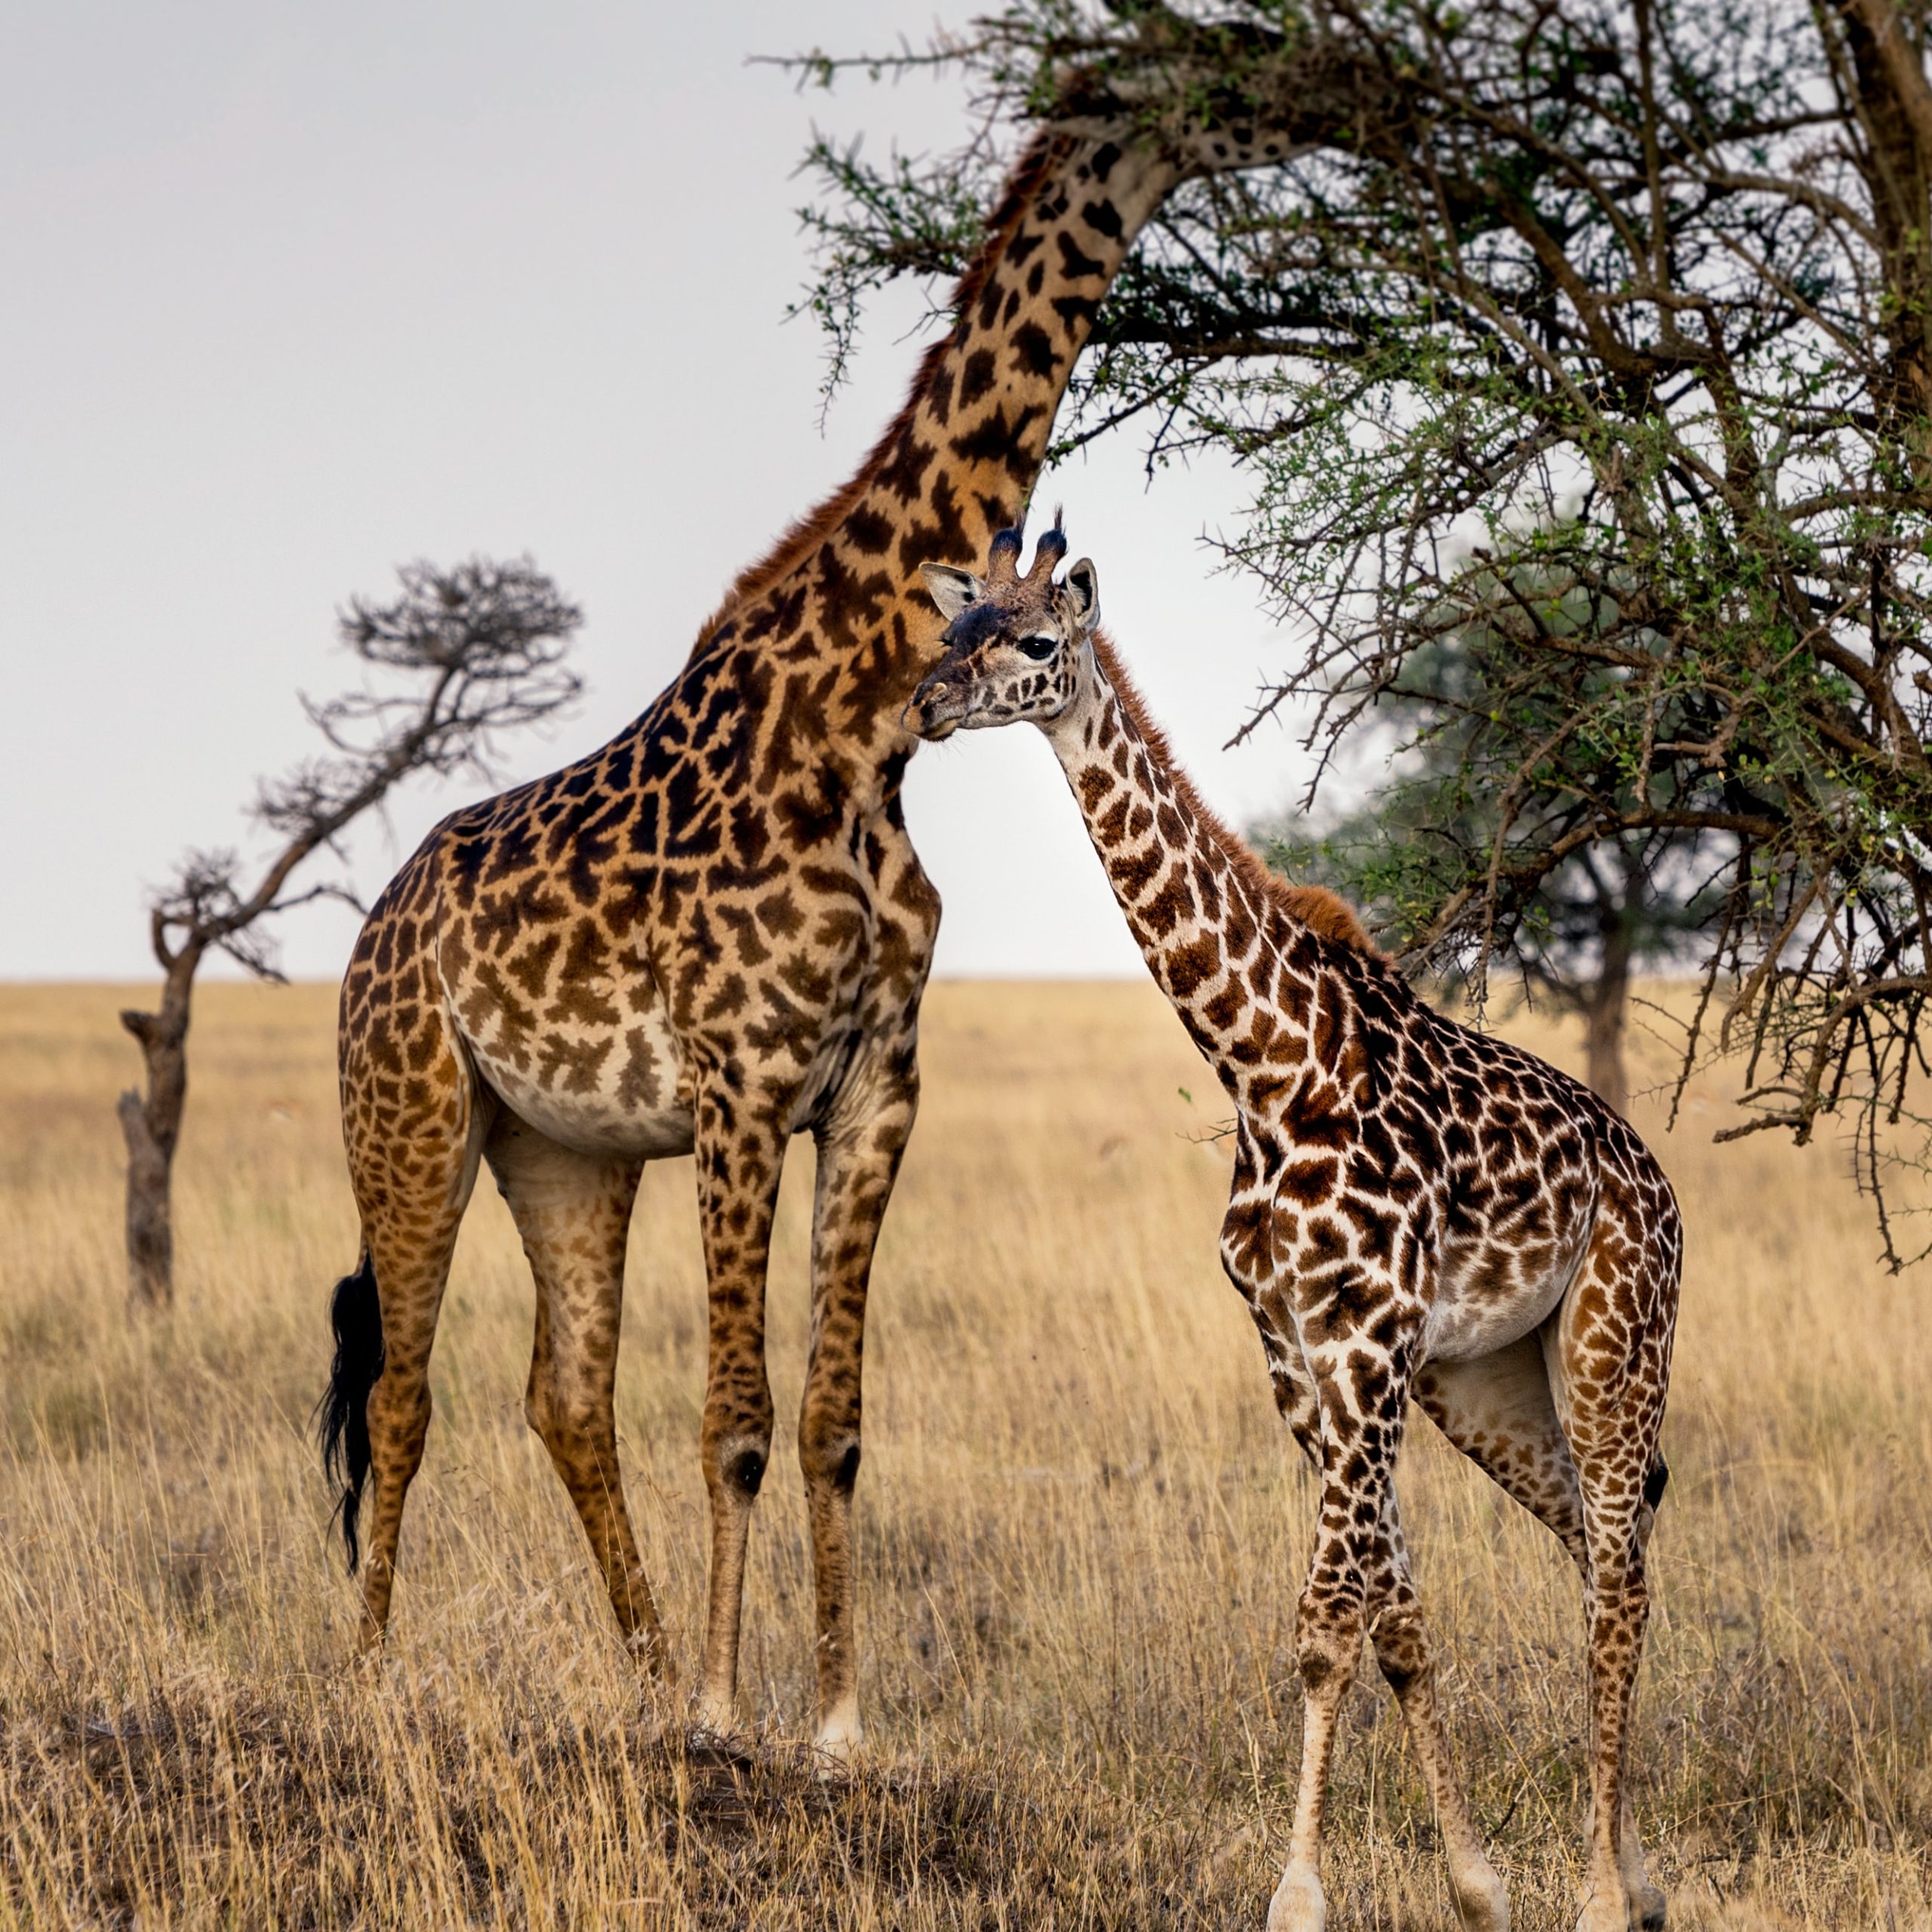 An adult giraffe and a giraffe calf browse from a tree in the Serengeti in Tanzania